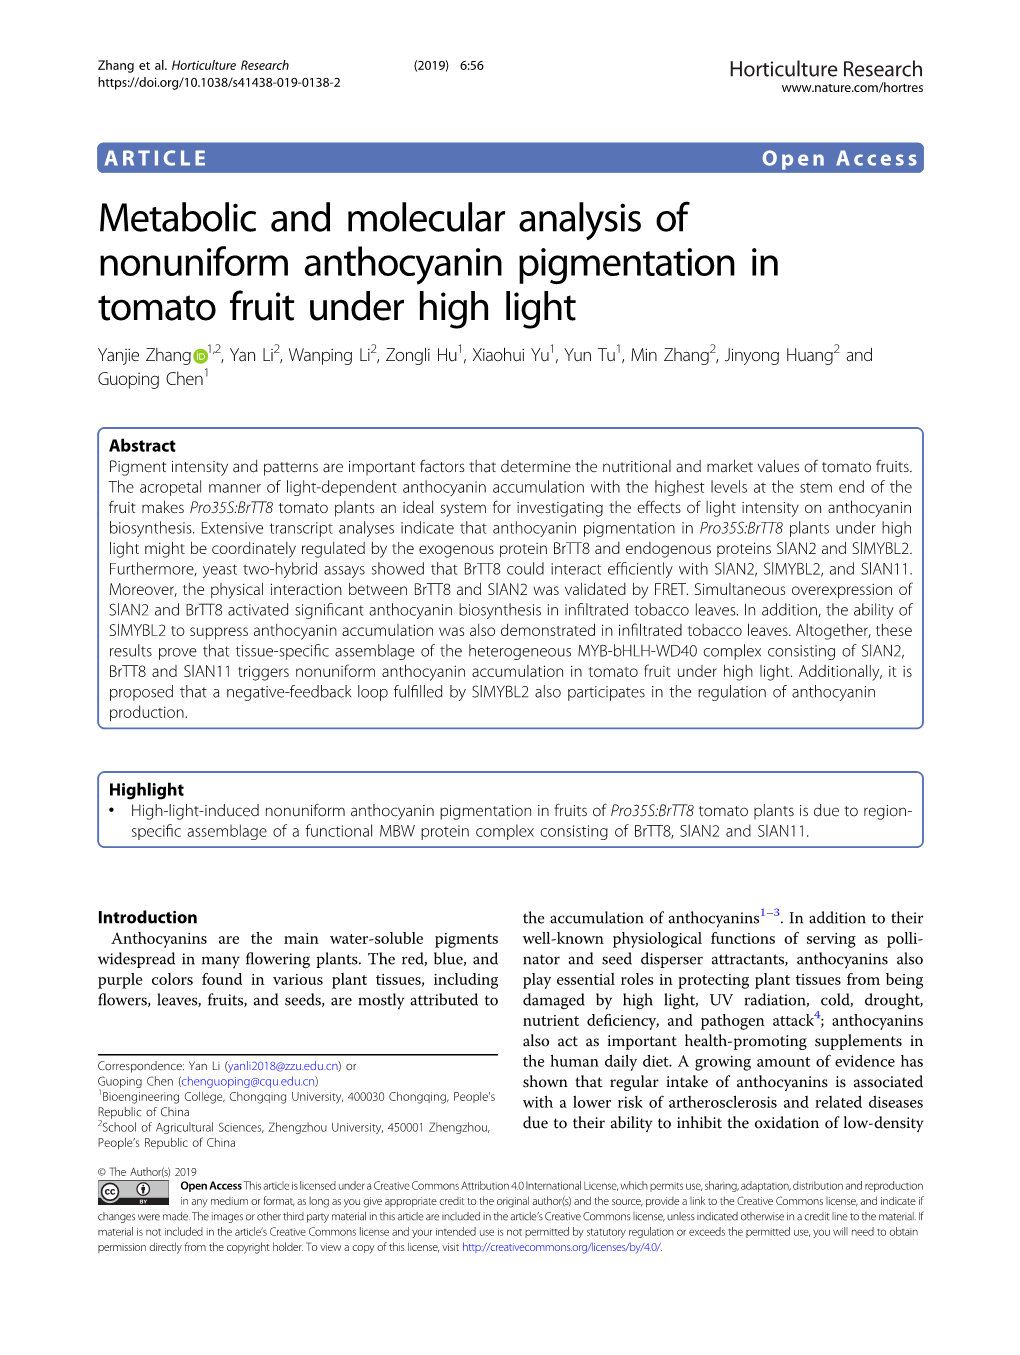 Metabolic and Molecular Analysis of Nonuniform Anthocyanin